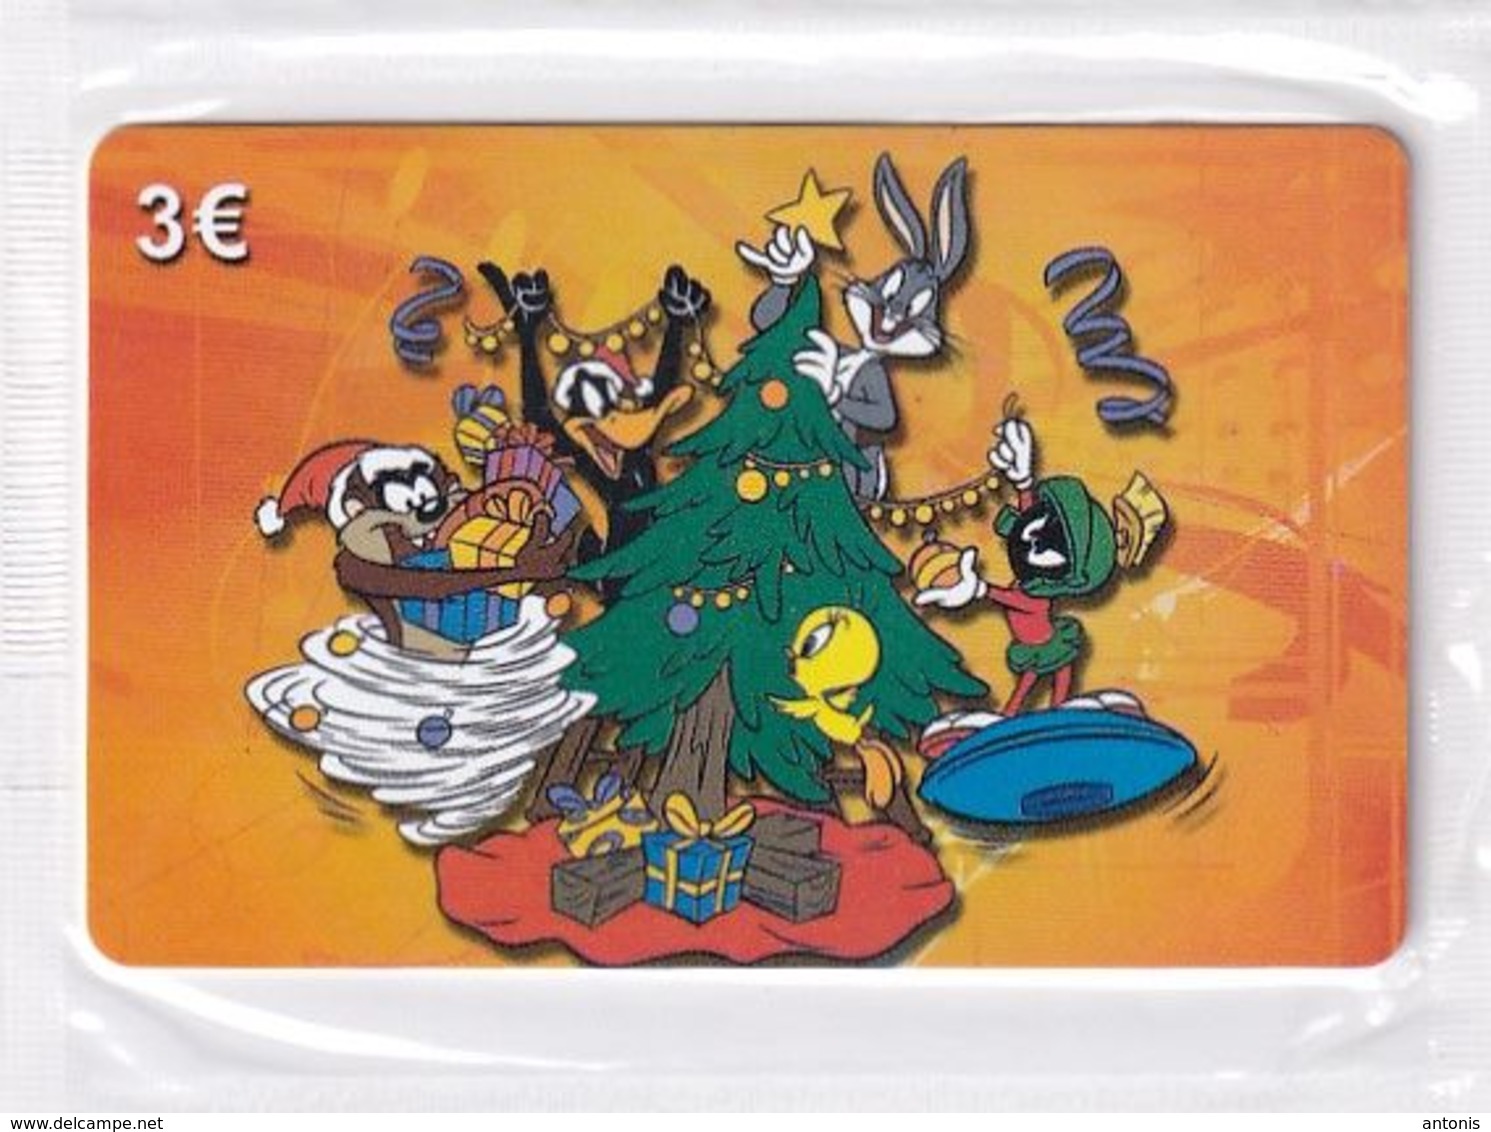 GREECE - Looney Tunes, Amimex Prepaid Card 3 Euro, Tirage 2000, Mint - Griechenland